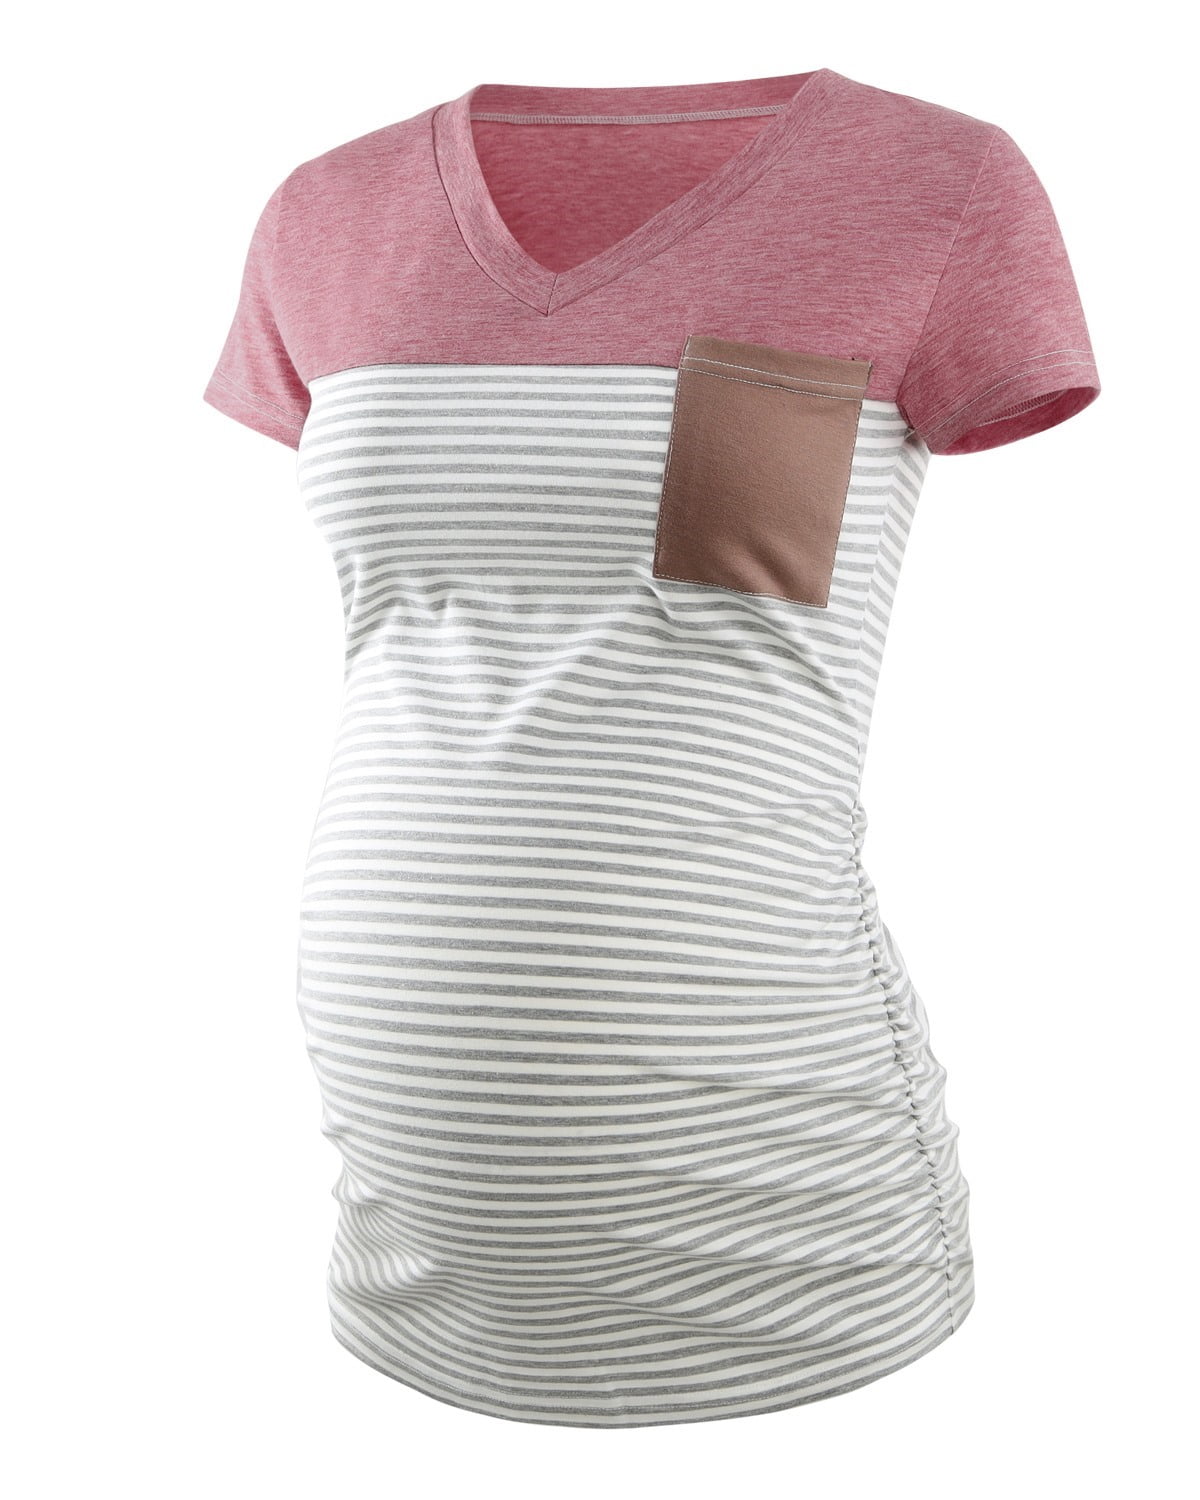 Ecavus Womens Maternity Tops Casual Long Sleeve V Neck Pregnancy Shirts